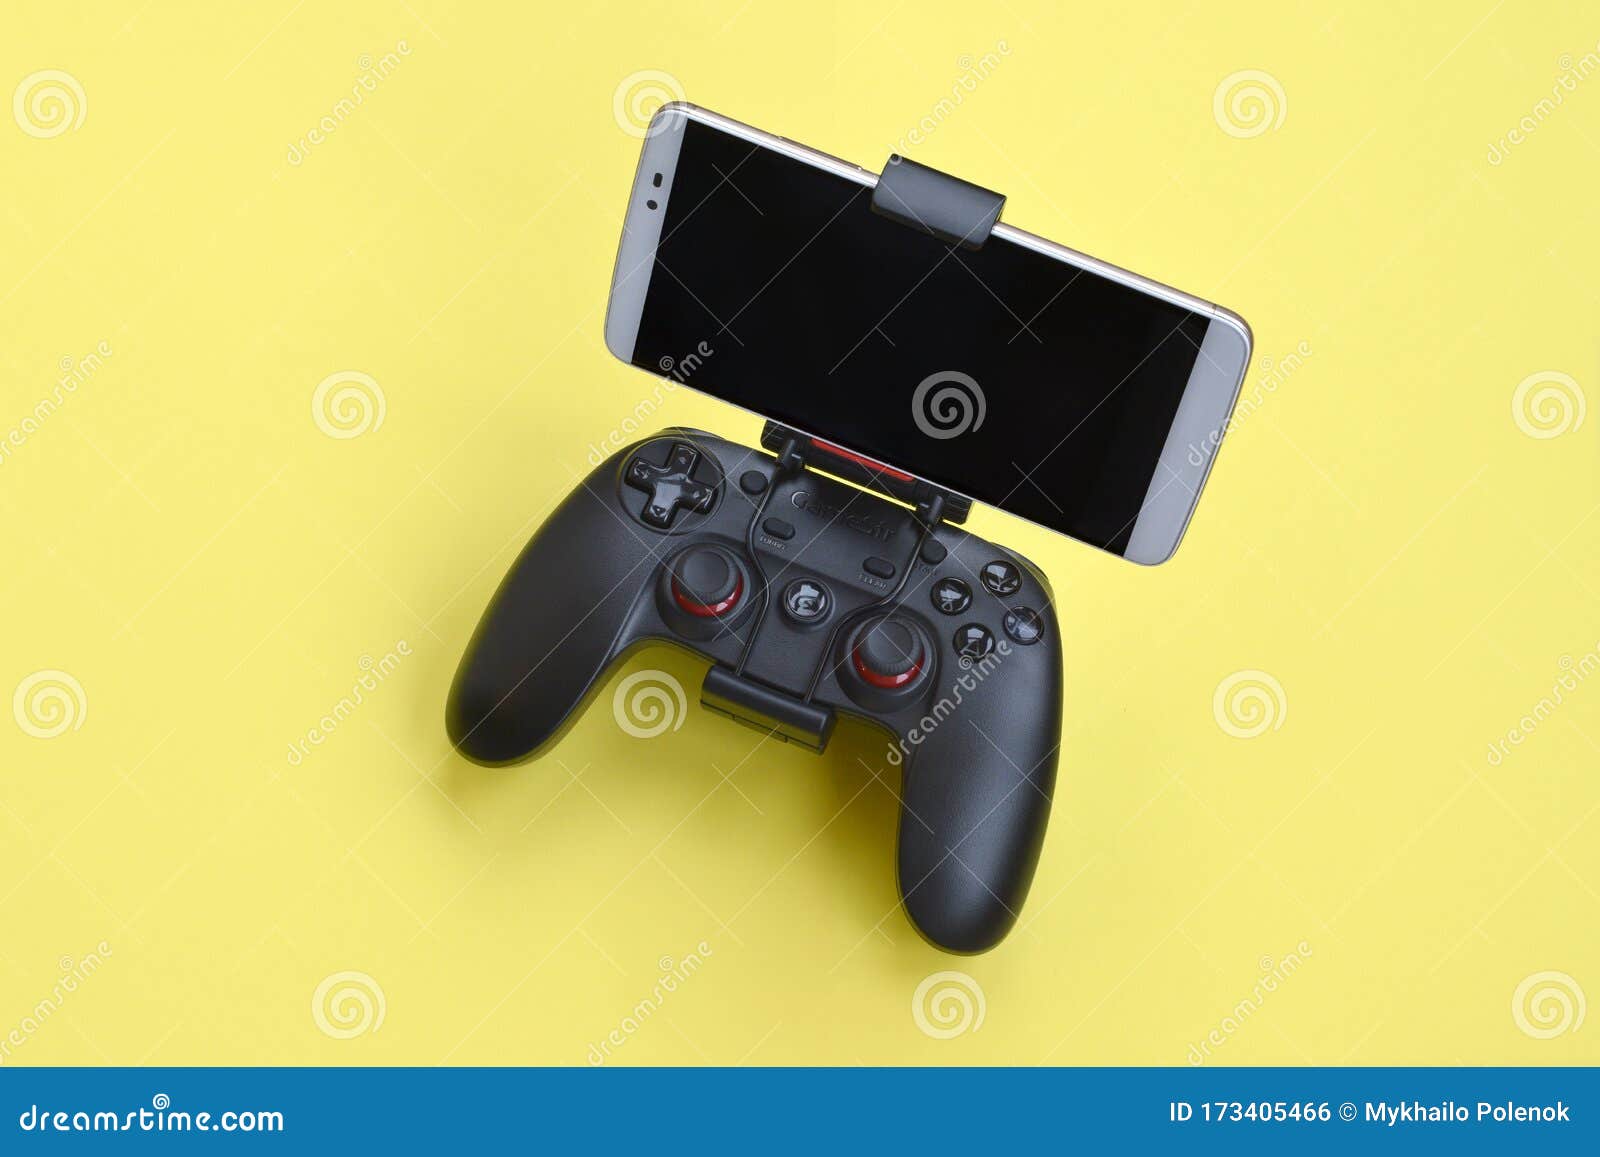 voor Vertrappen verwijderen Gamesir G3s Modern Black Gamepad for Smartphone on Yellow Background Close  Up Editorial Photo - Image of display, editorial: 173405466